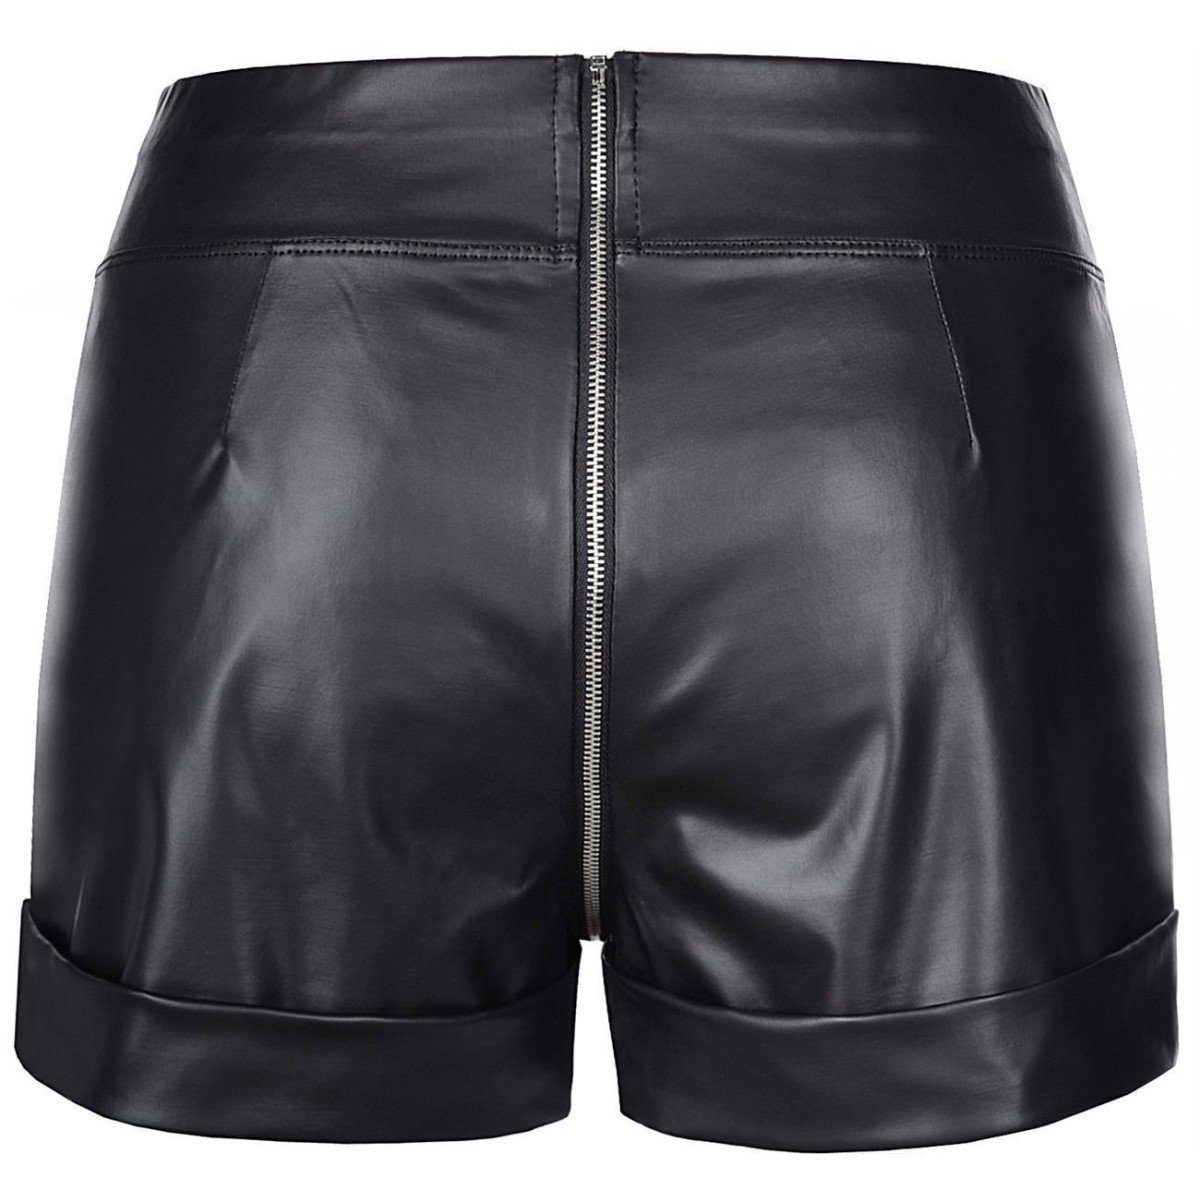 shorts Leggings V-9153 Axami - black (L,M,S,XL)